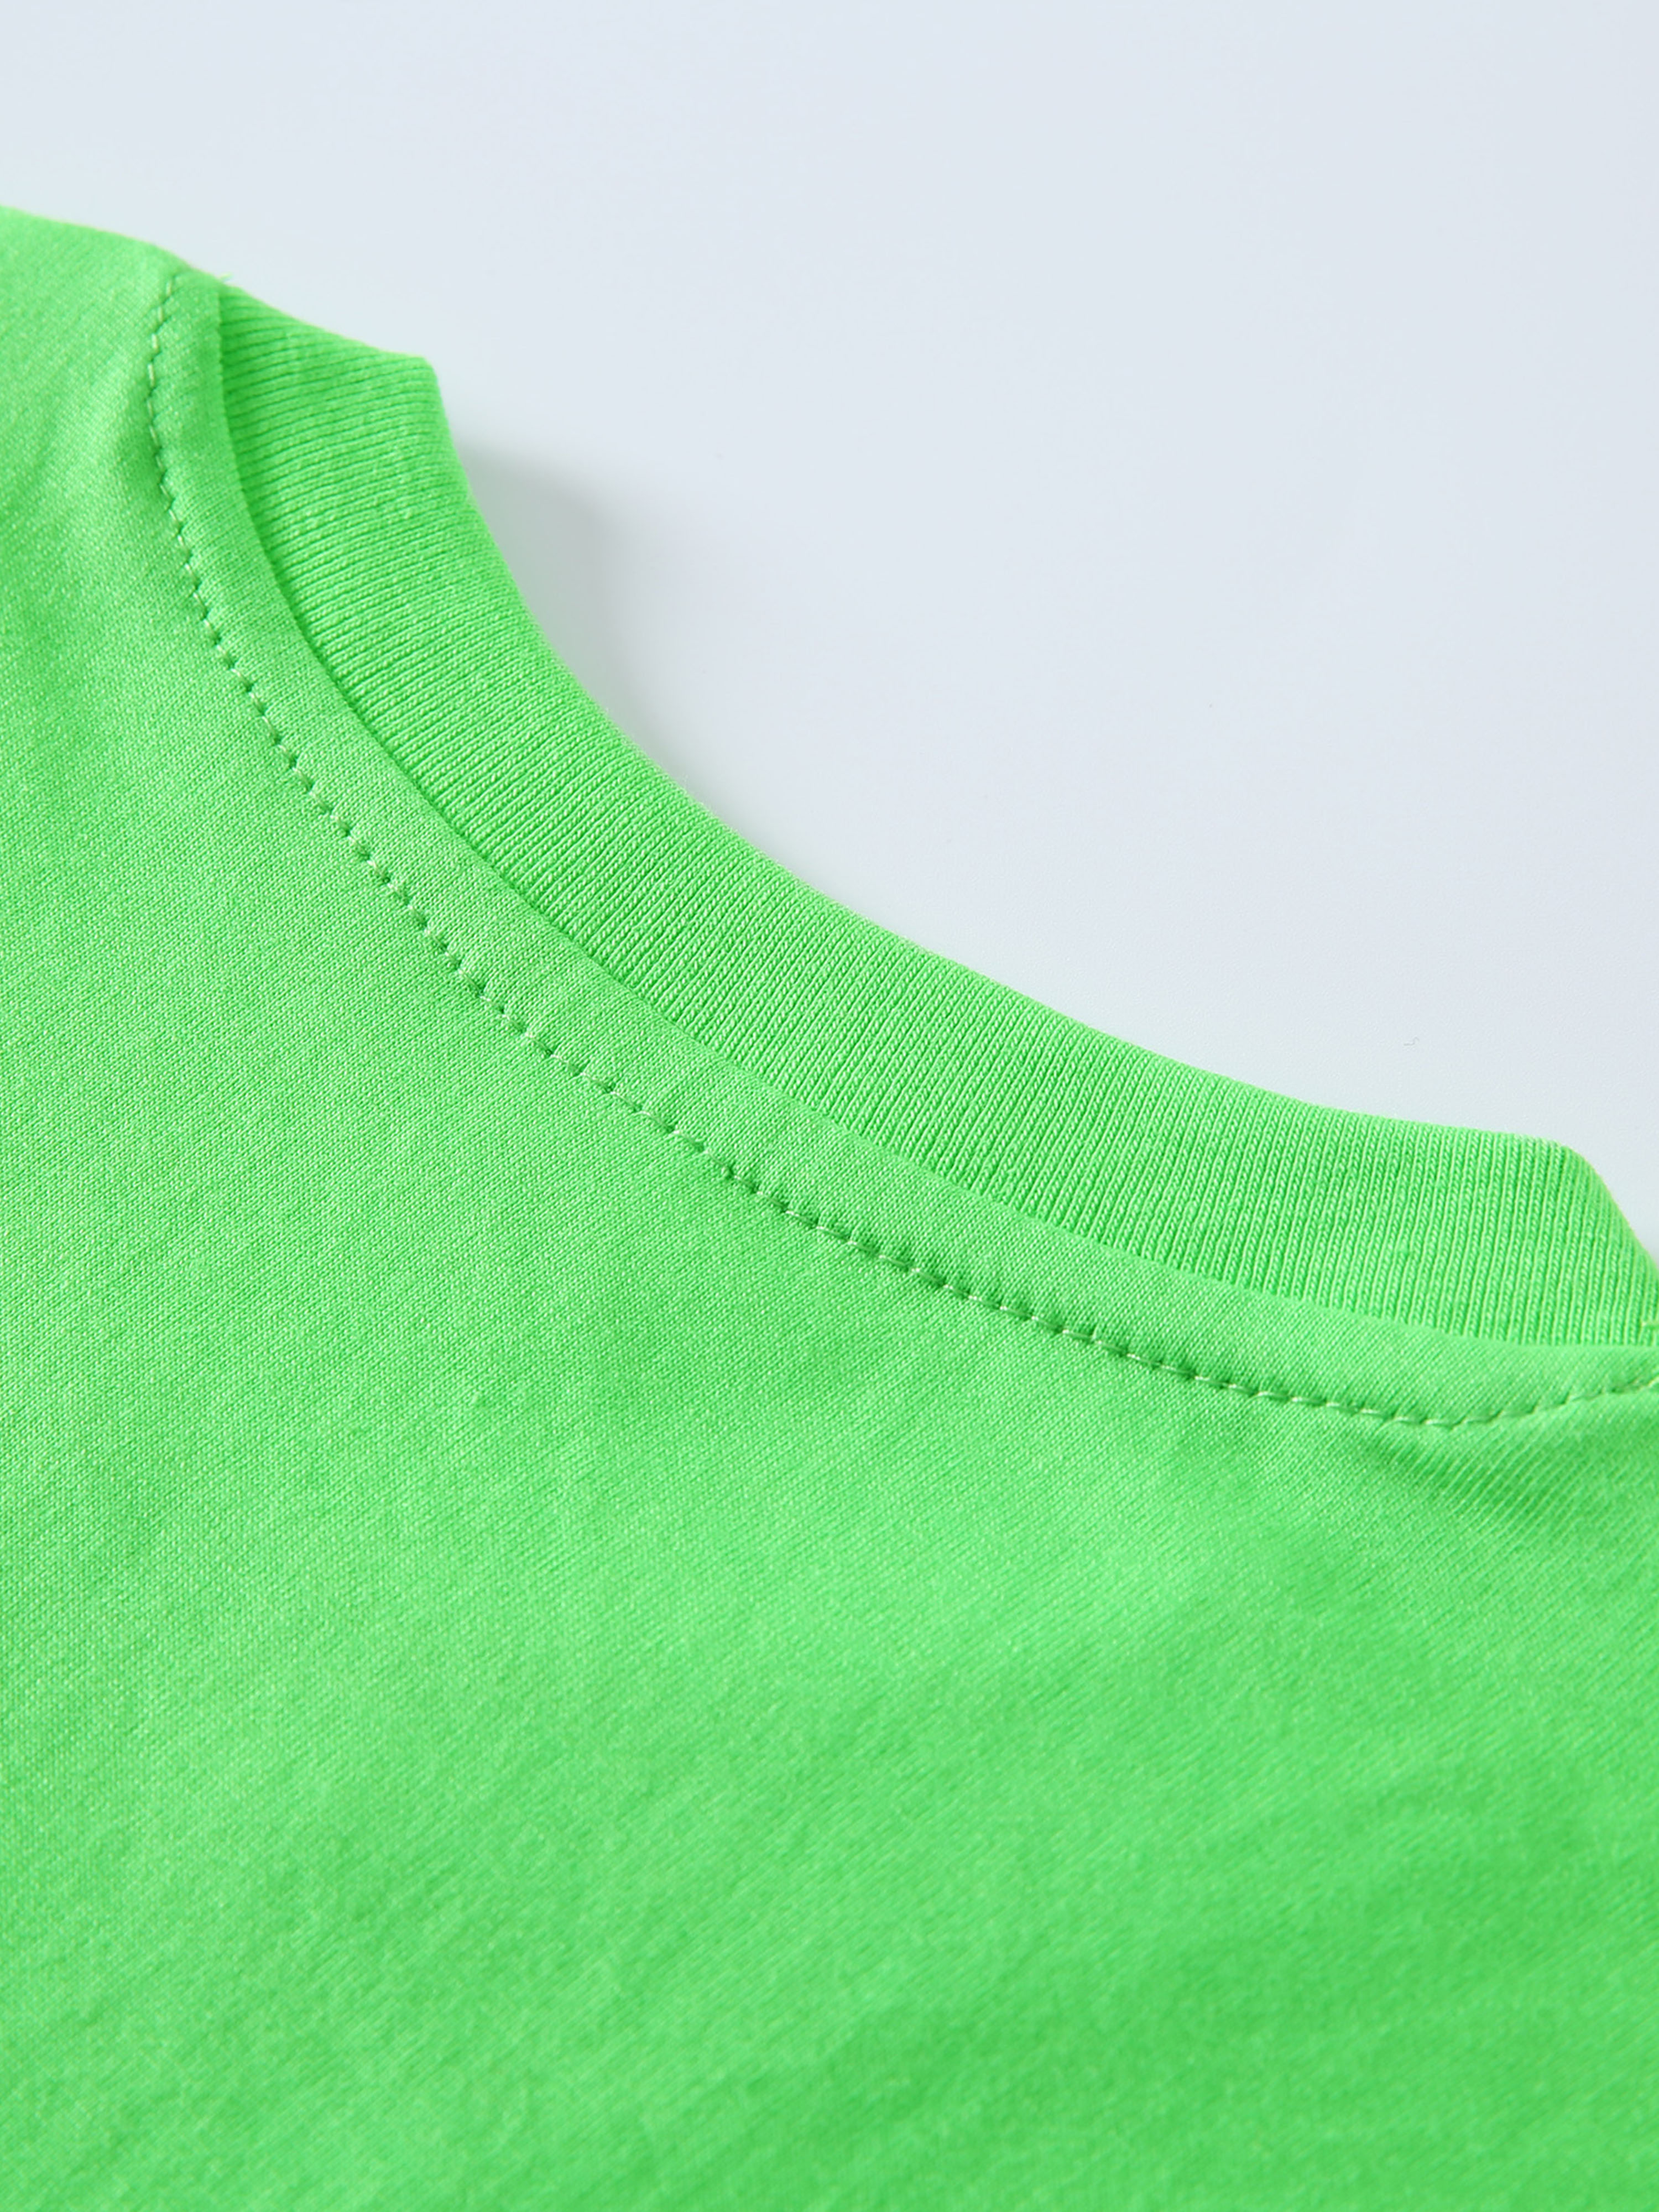 Camiseta De Neón Hombres/Mujeres Verano Verde Niño/Niña Color